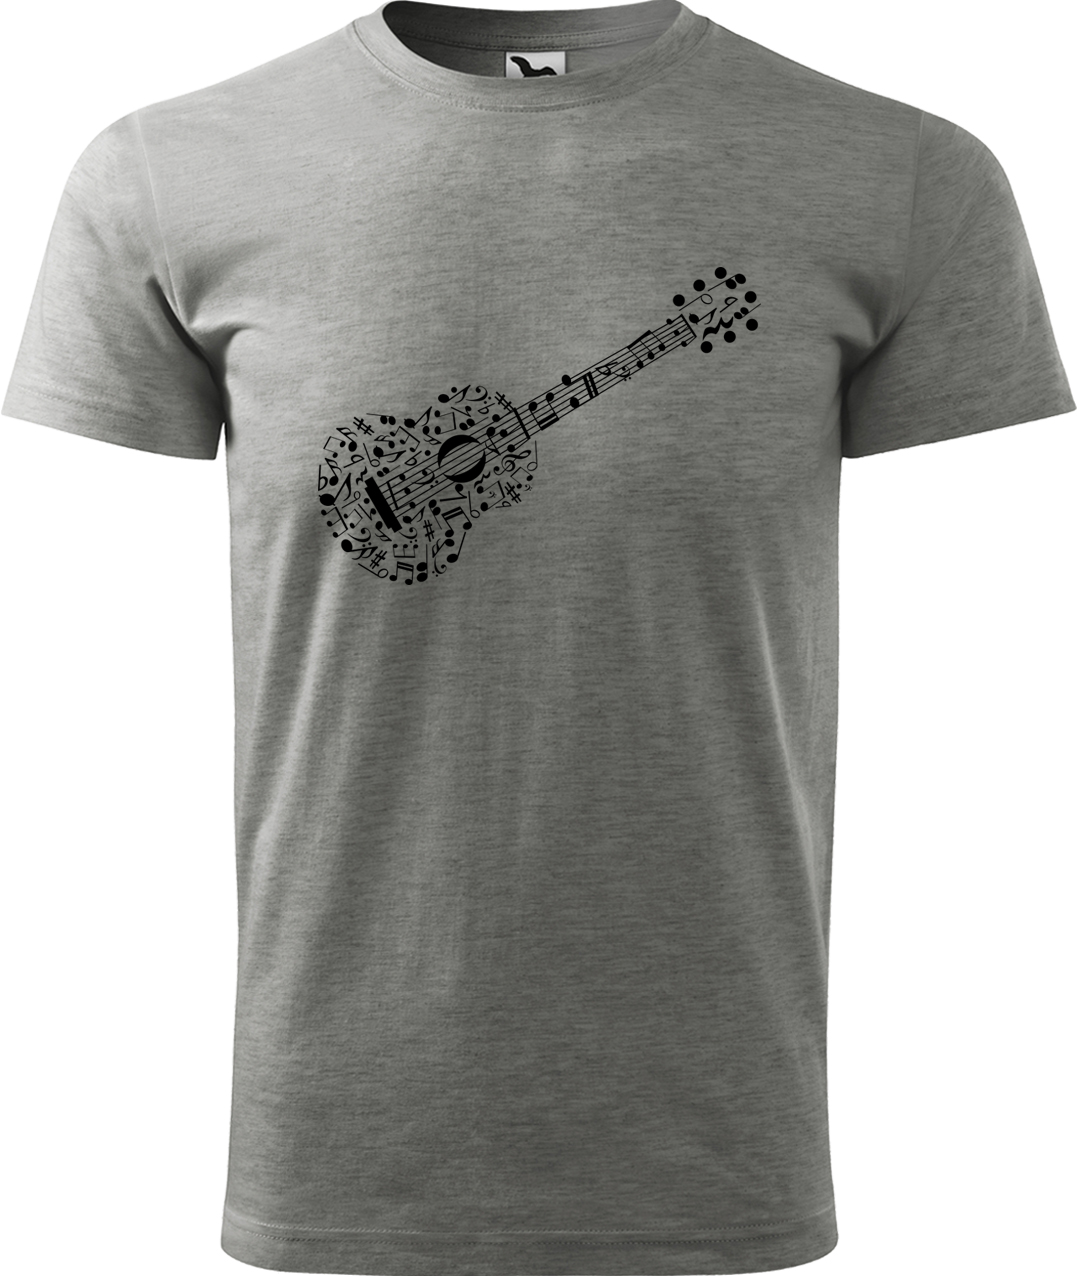 Pánské tričko s kytarou - Kytara z not Velikost: 2XL, Barva: Tmavě šedý melír (12), Střih: pánský